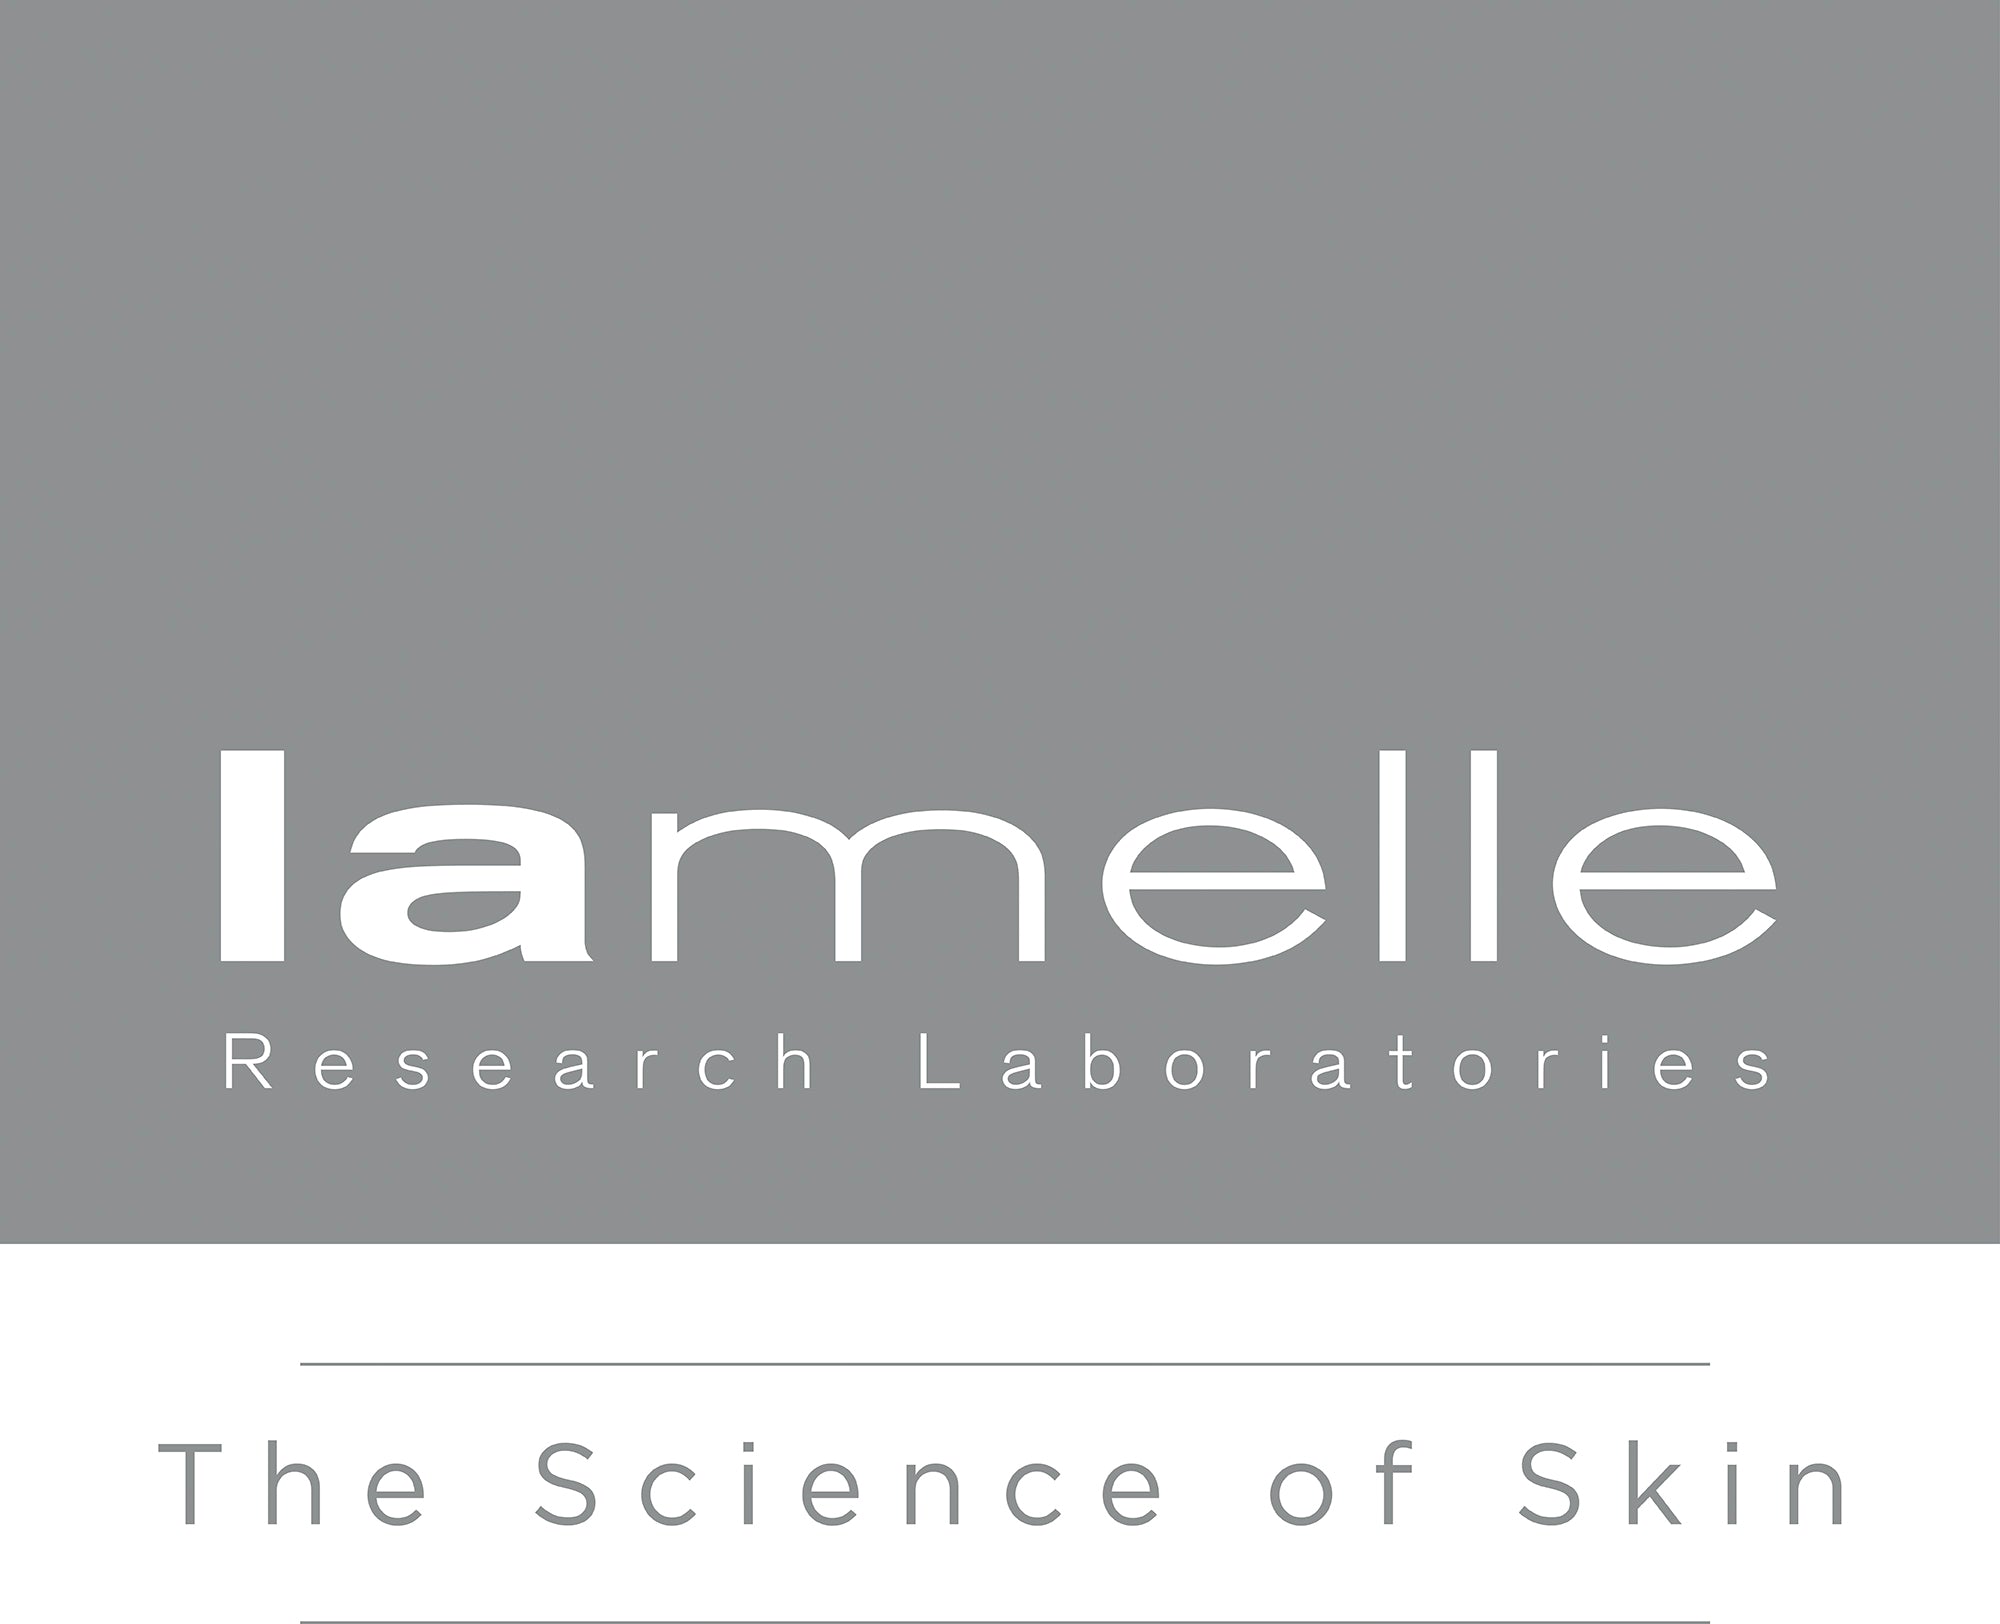 Nourish Revitalise Cream | Lamelle